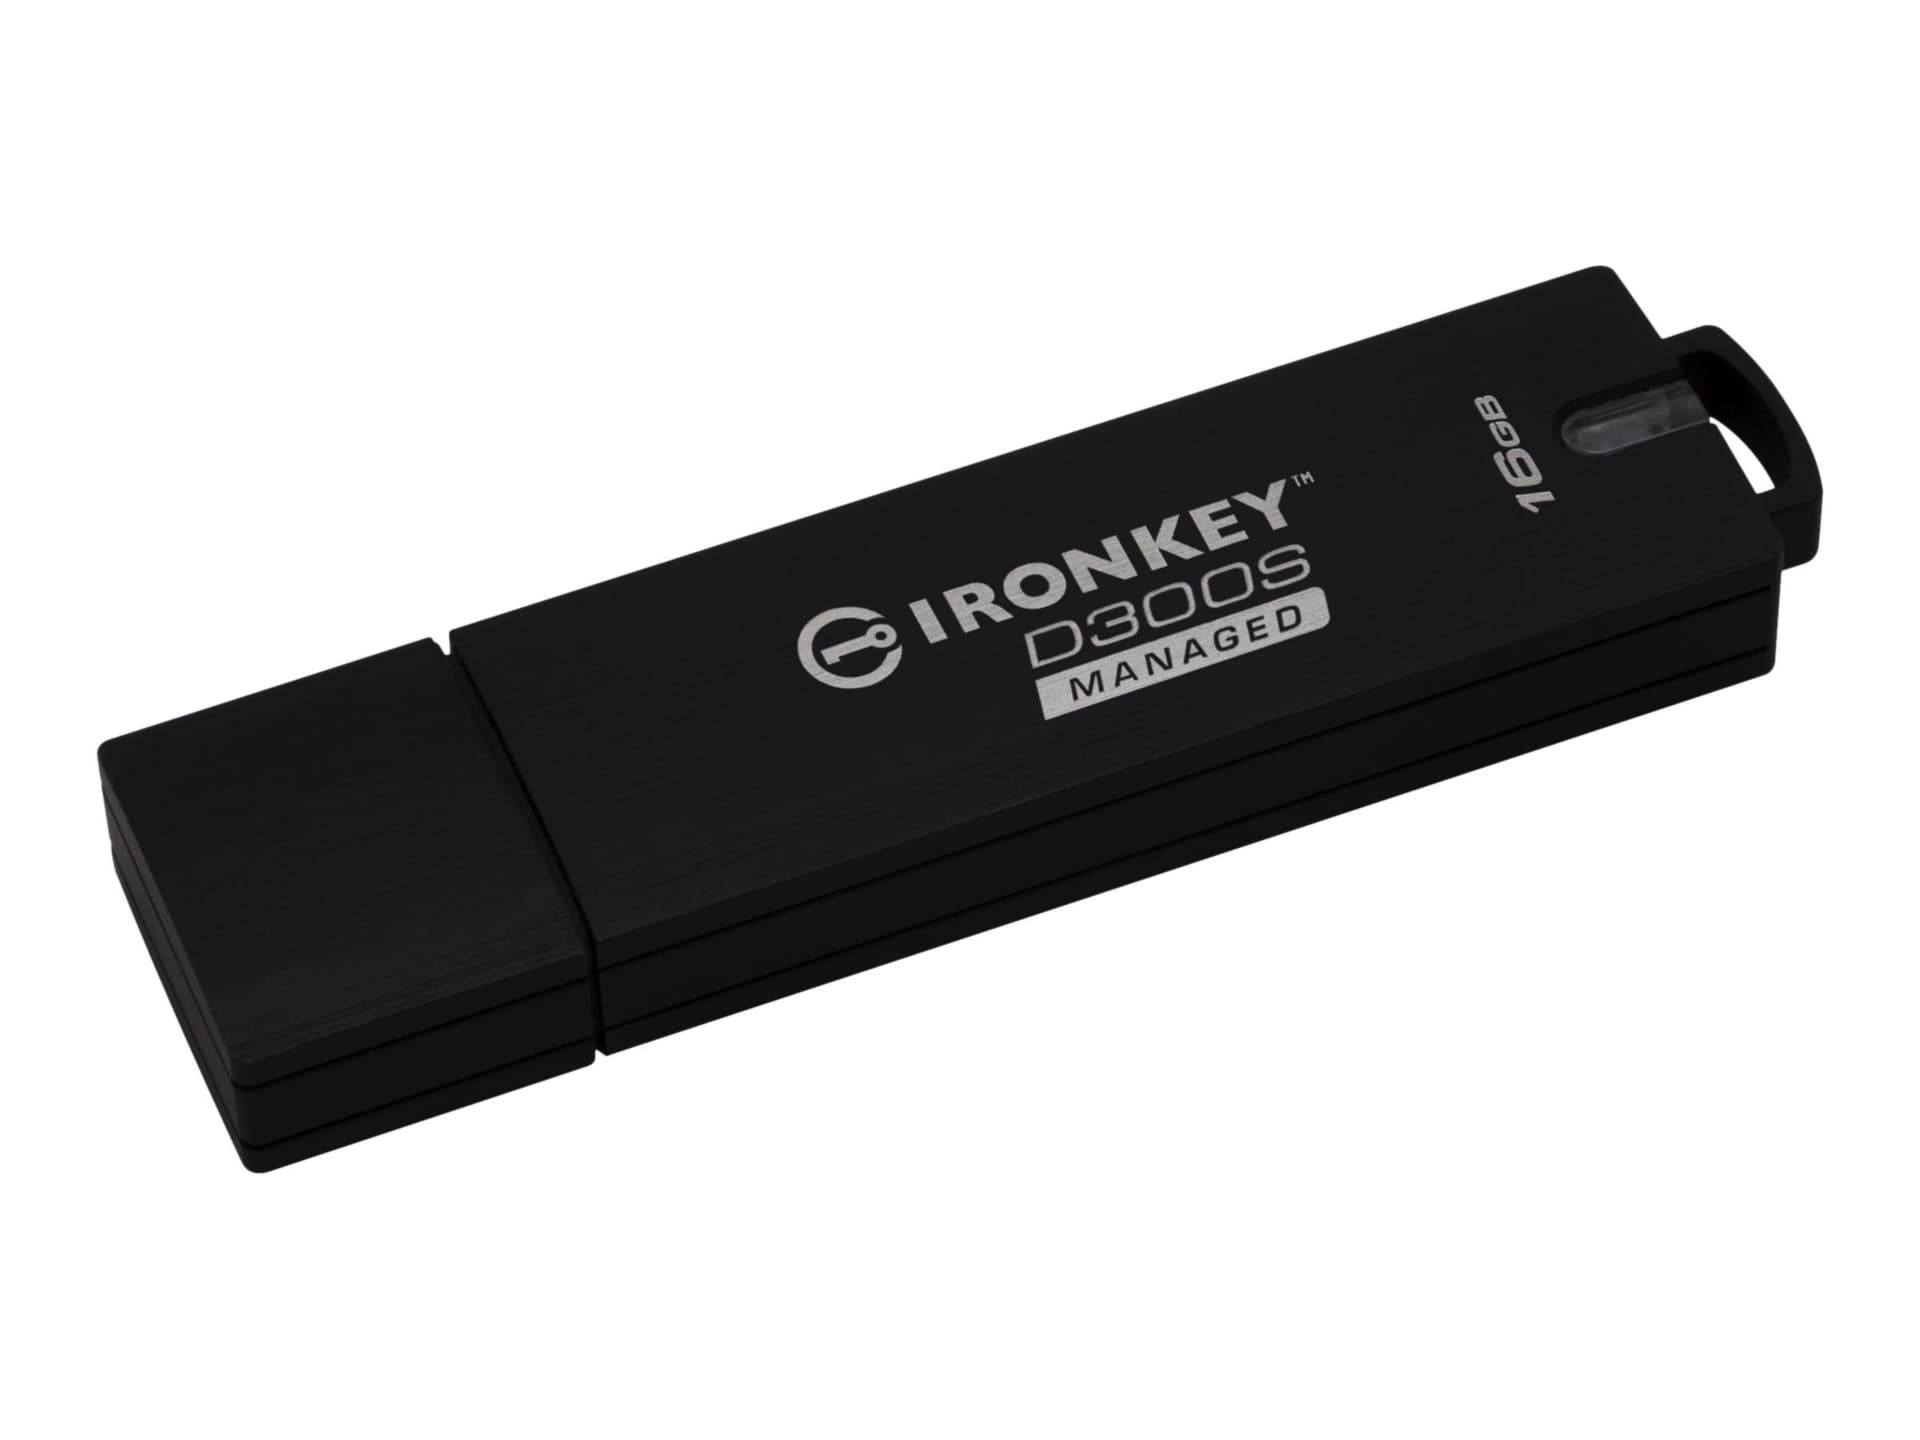 IronKey D300S Managed - USB flash drive - 64 GB - TAA Compliant